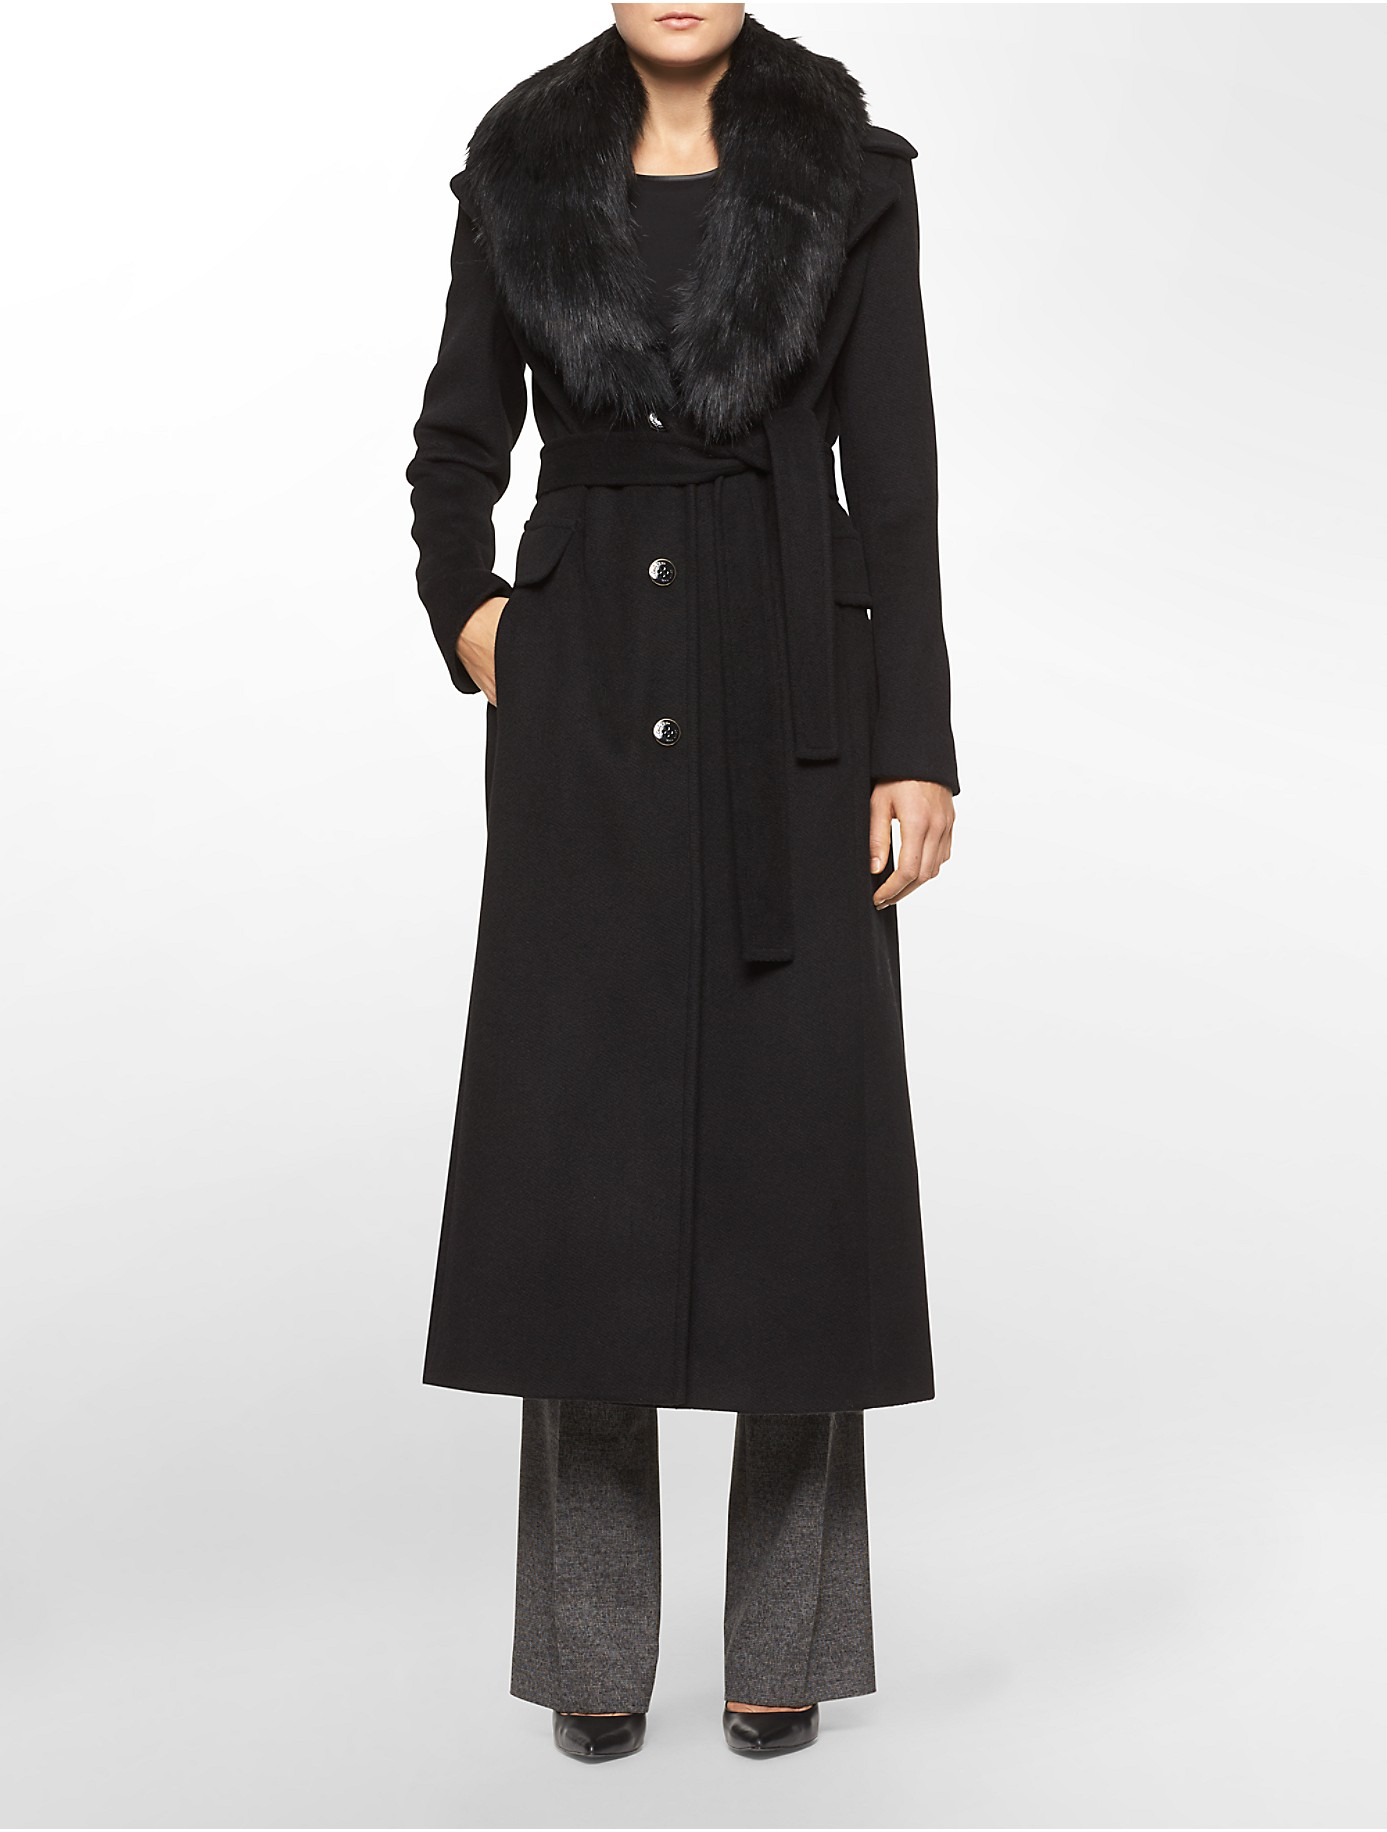 Calvin Klein Faux Fur Trim Collar Belted Maxi Coat in Black - Lyst